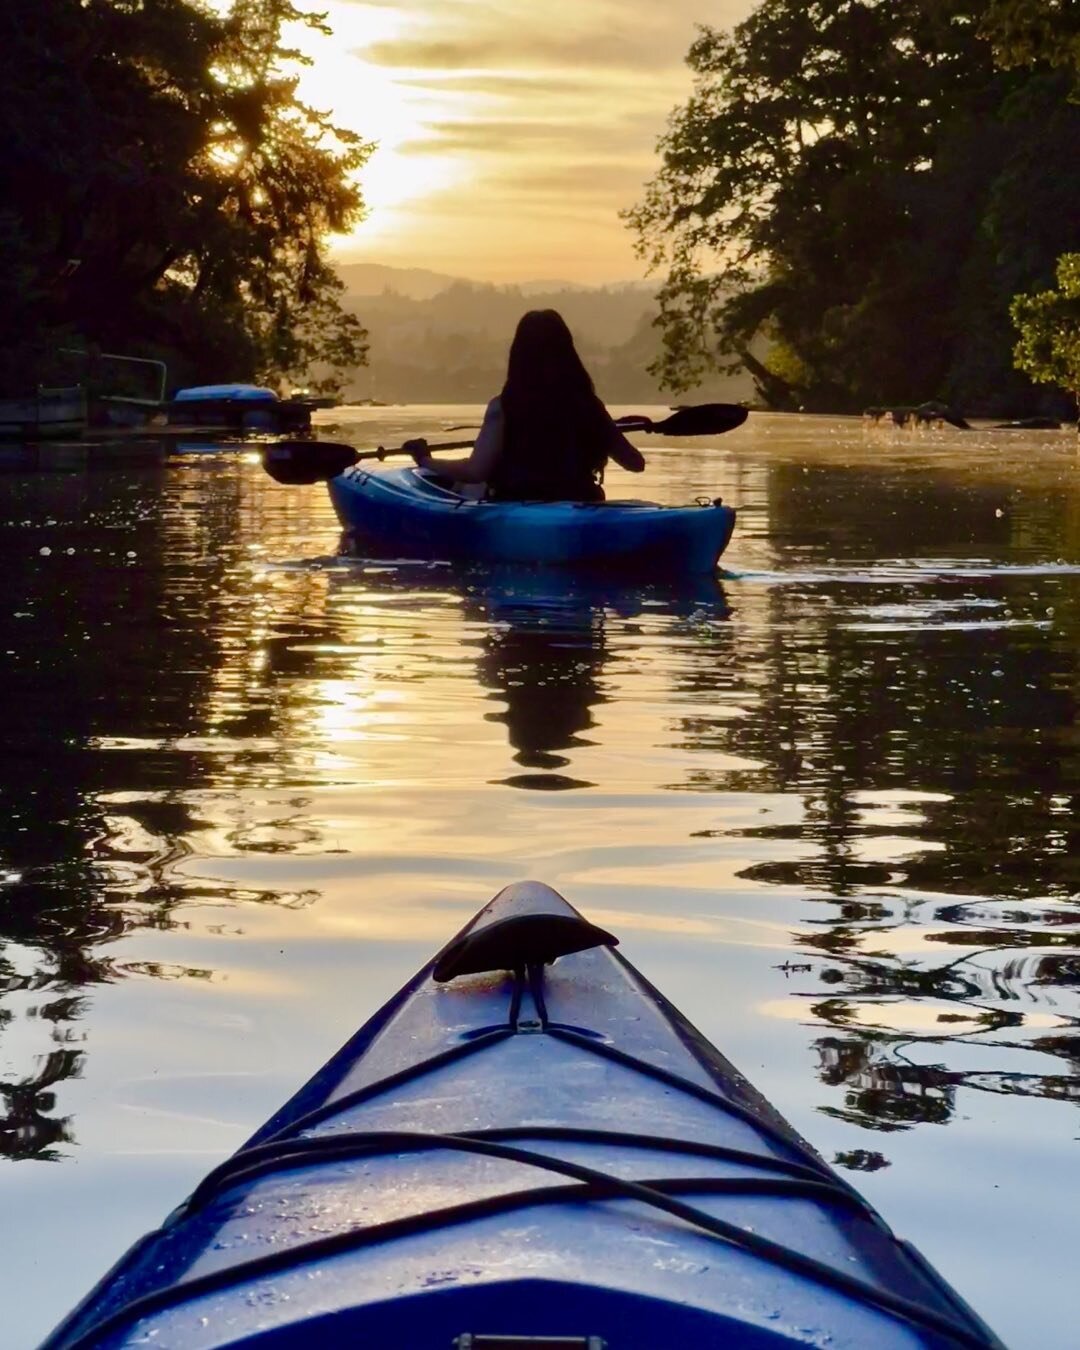 Heart of lightness. 

Rainy day dreams of summer, and heading up the river with @taramossauthor 

#kayak #love #summer #light #water #victoriabc #victoria #esquimalt #canada #explorebc